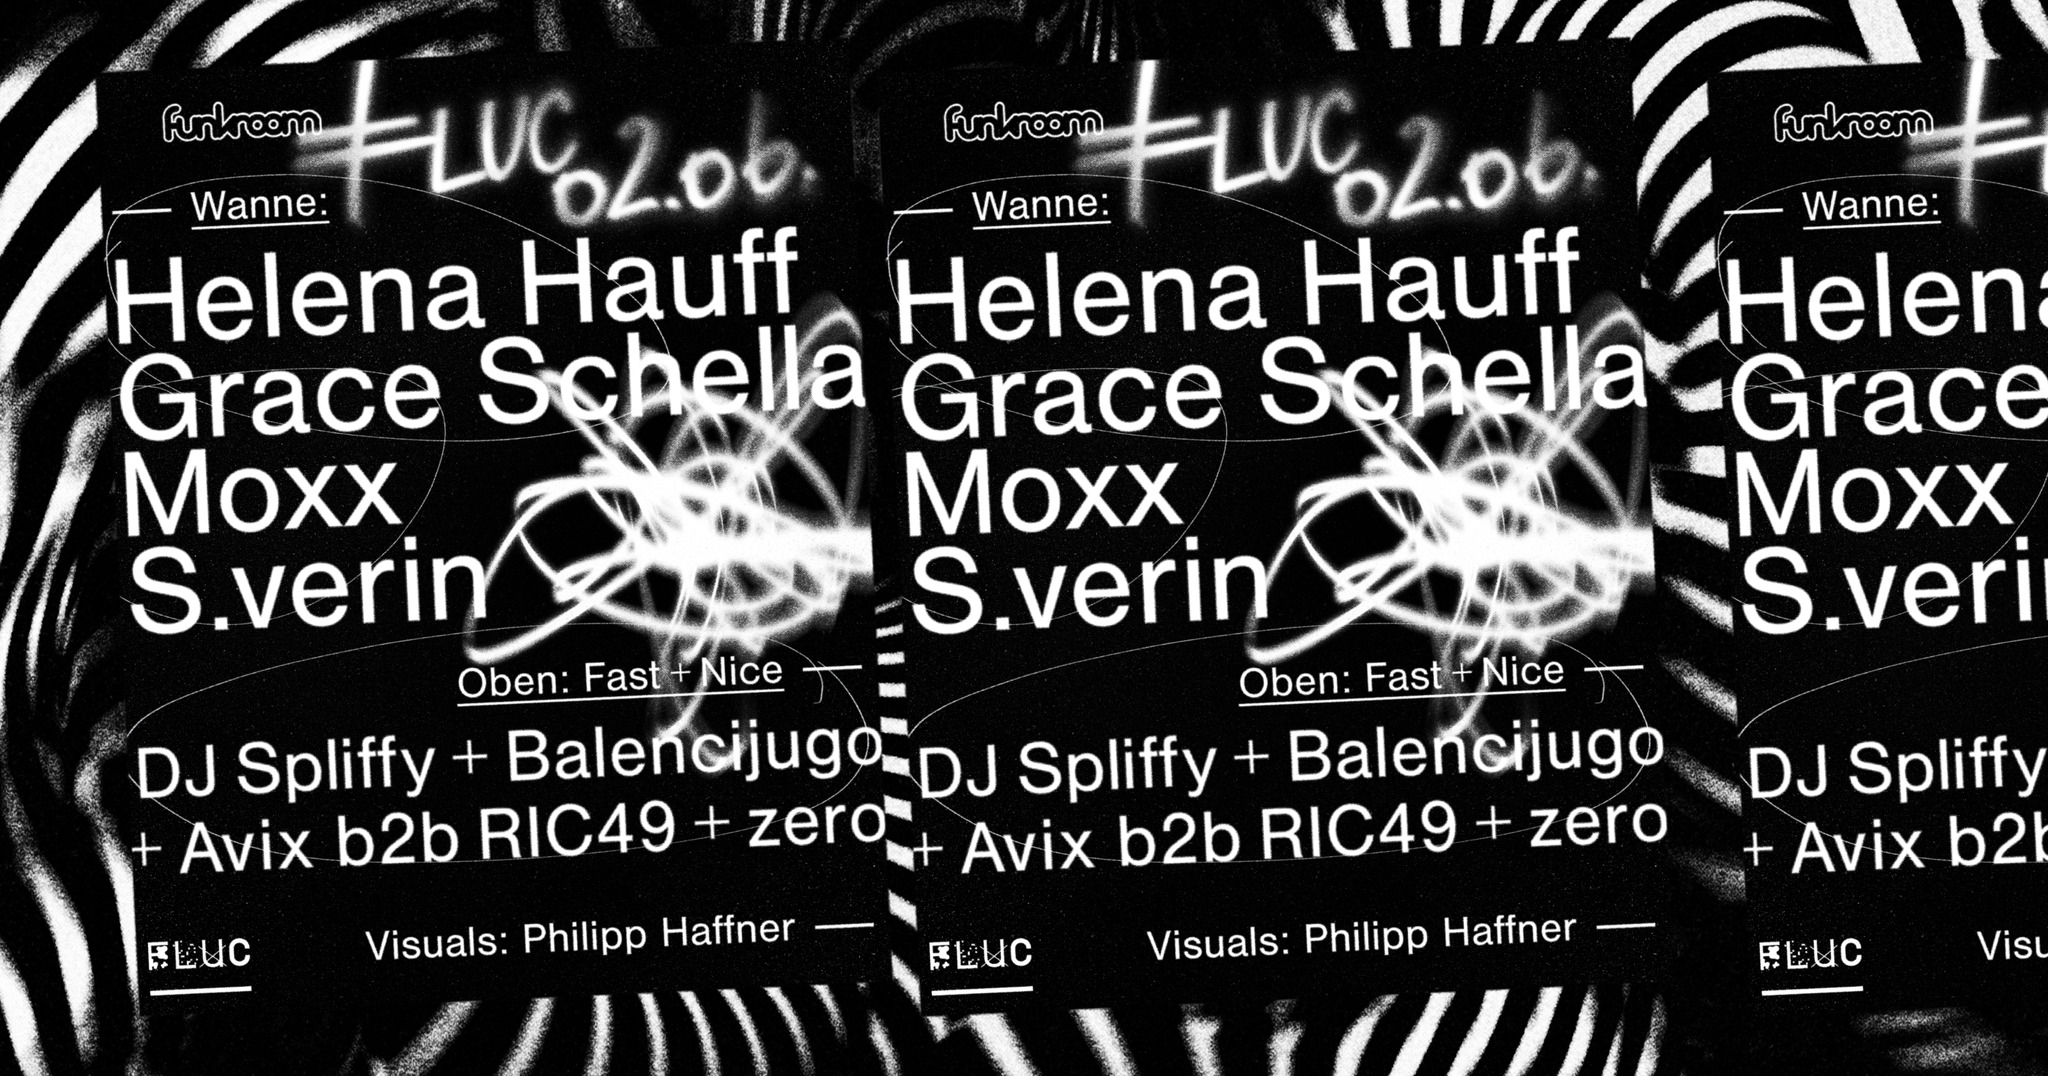 FUNKROOM Helena Hauff Grace Schella Fast+N1ce am 2. June 2023 @ Fluc.